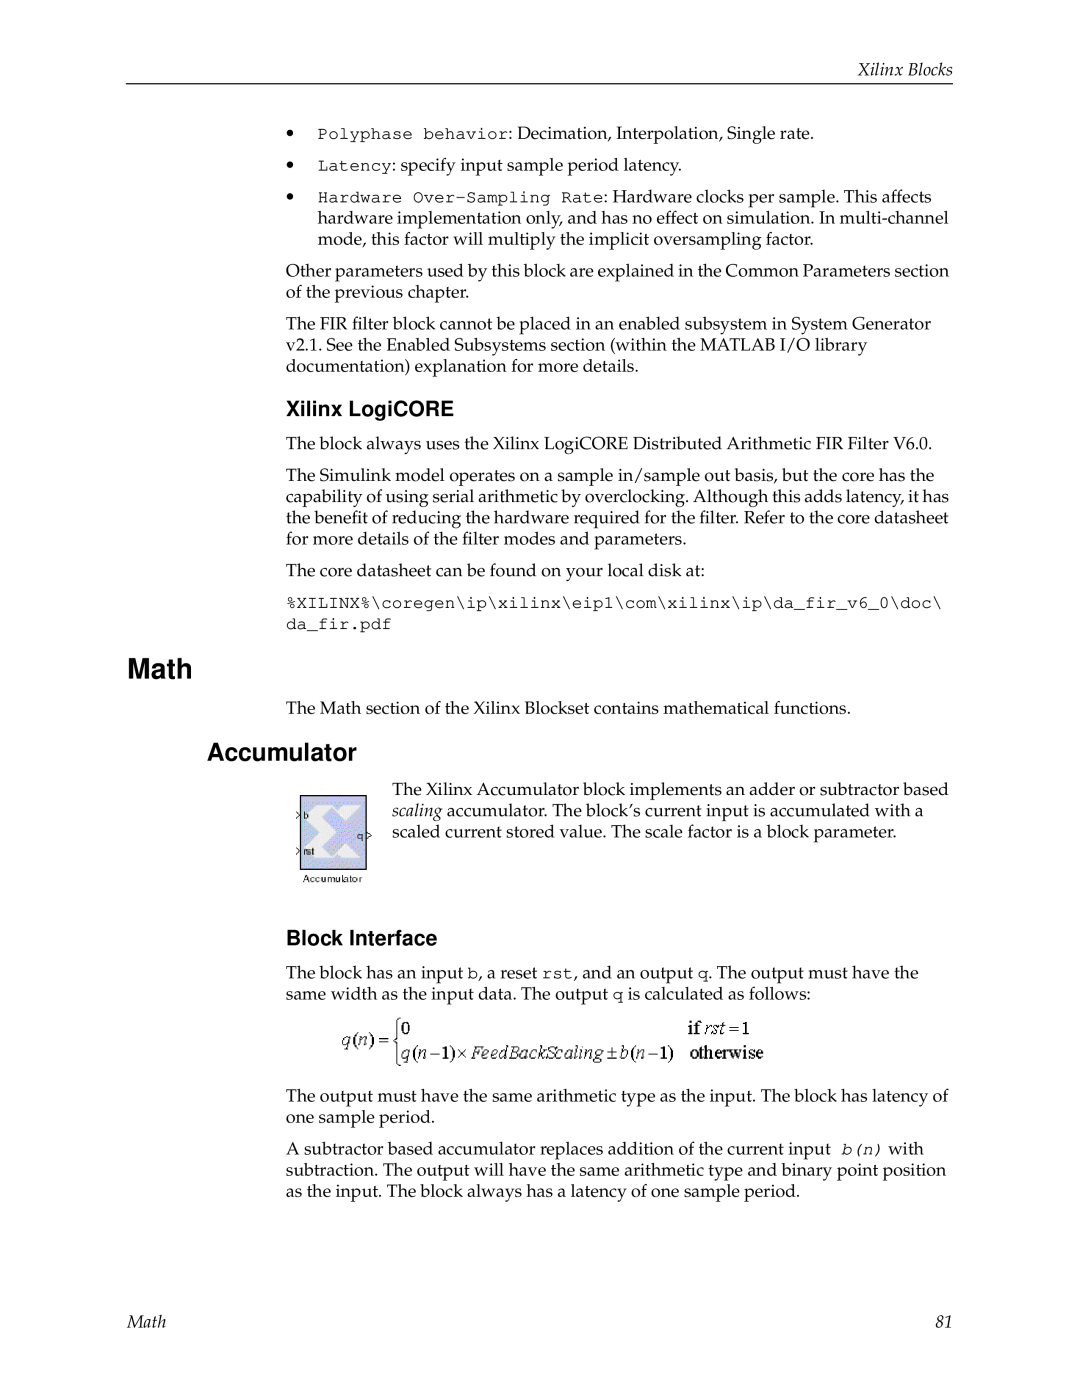 Xilinx V2.1 manual Math, Accumulator, Xilinx LogiCORE, Block Interface, Xilinx Blocks 